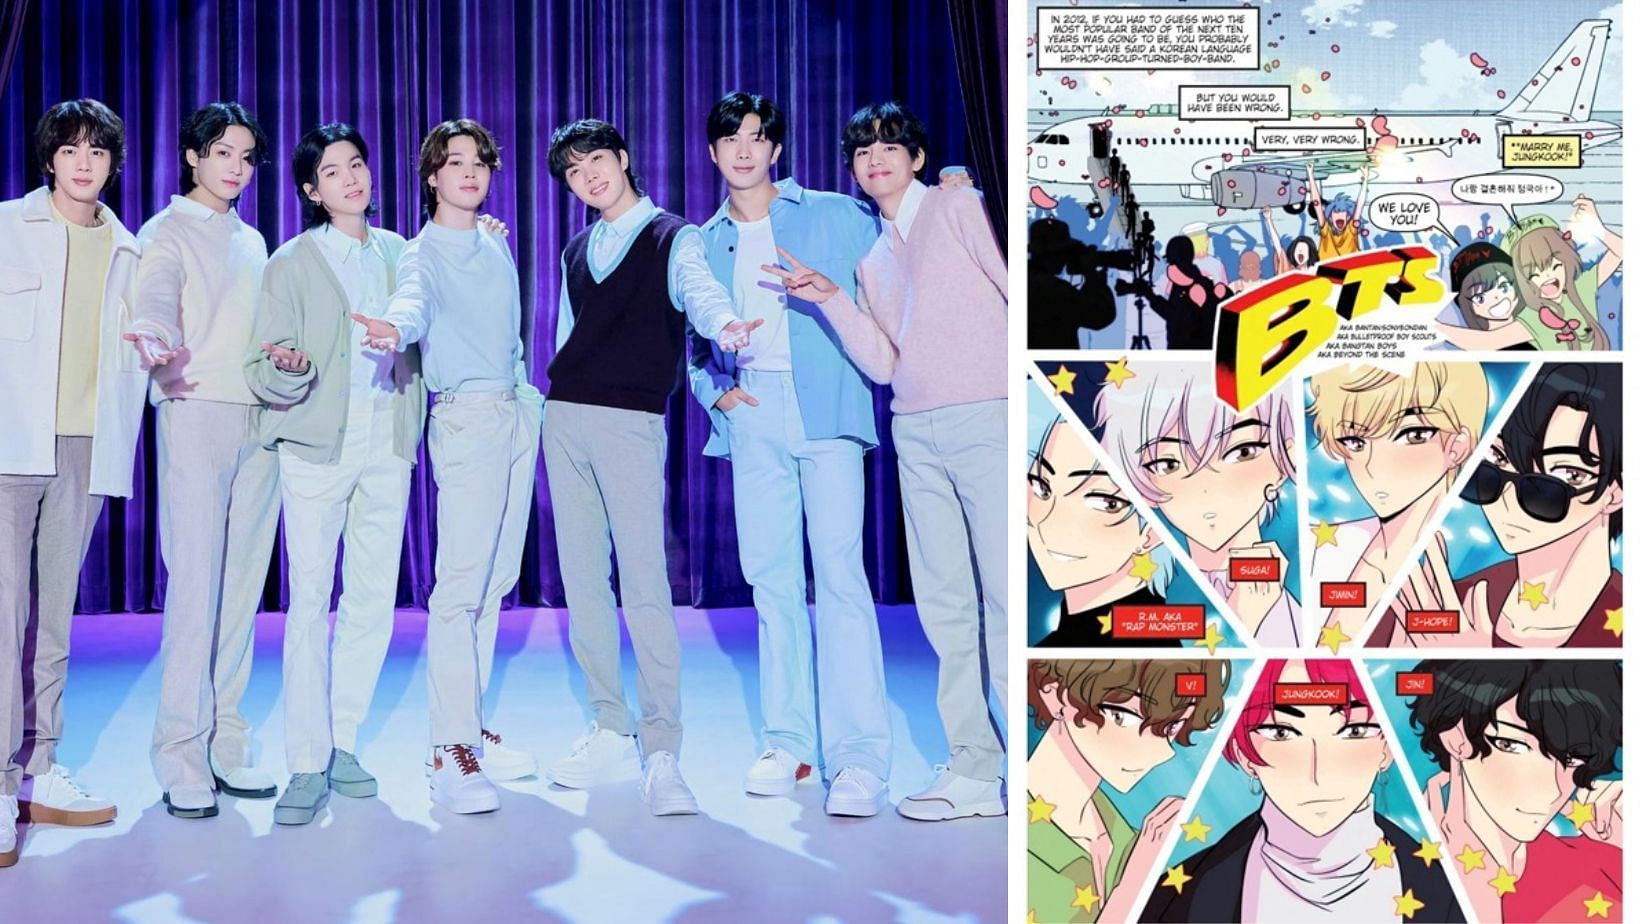 BTS comic book by TidalWave faces backlash. Images via X/@Bangtan7_Stream, @SnowBuffering)